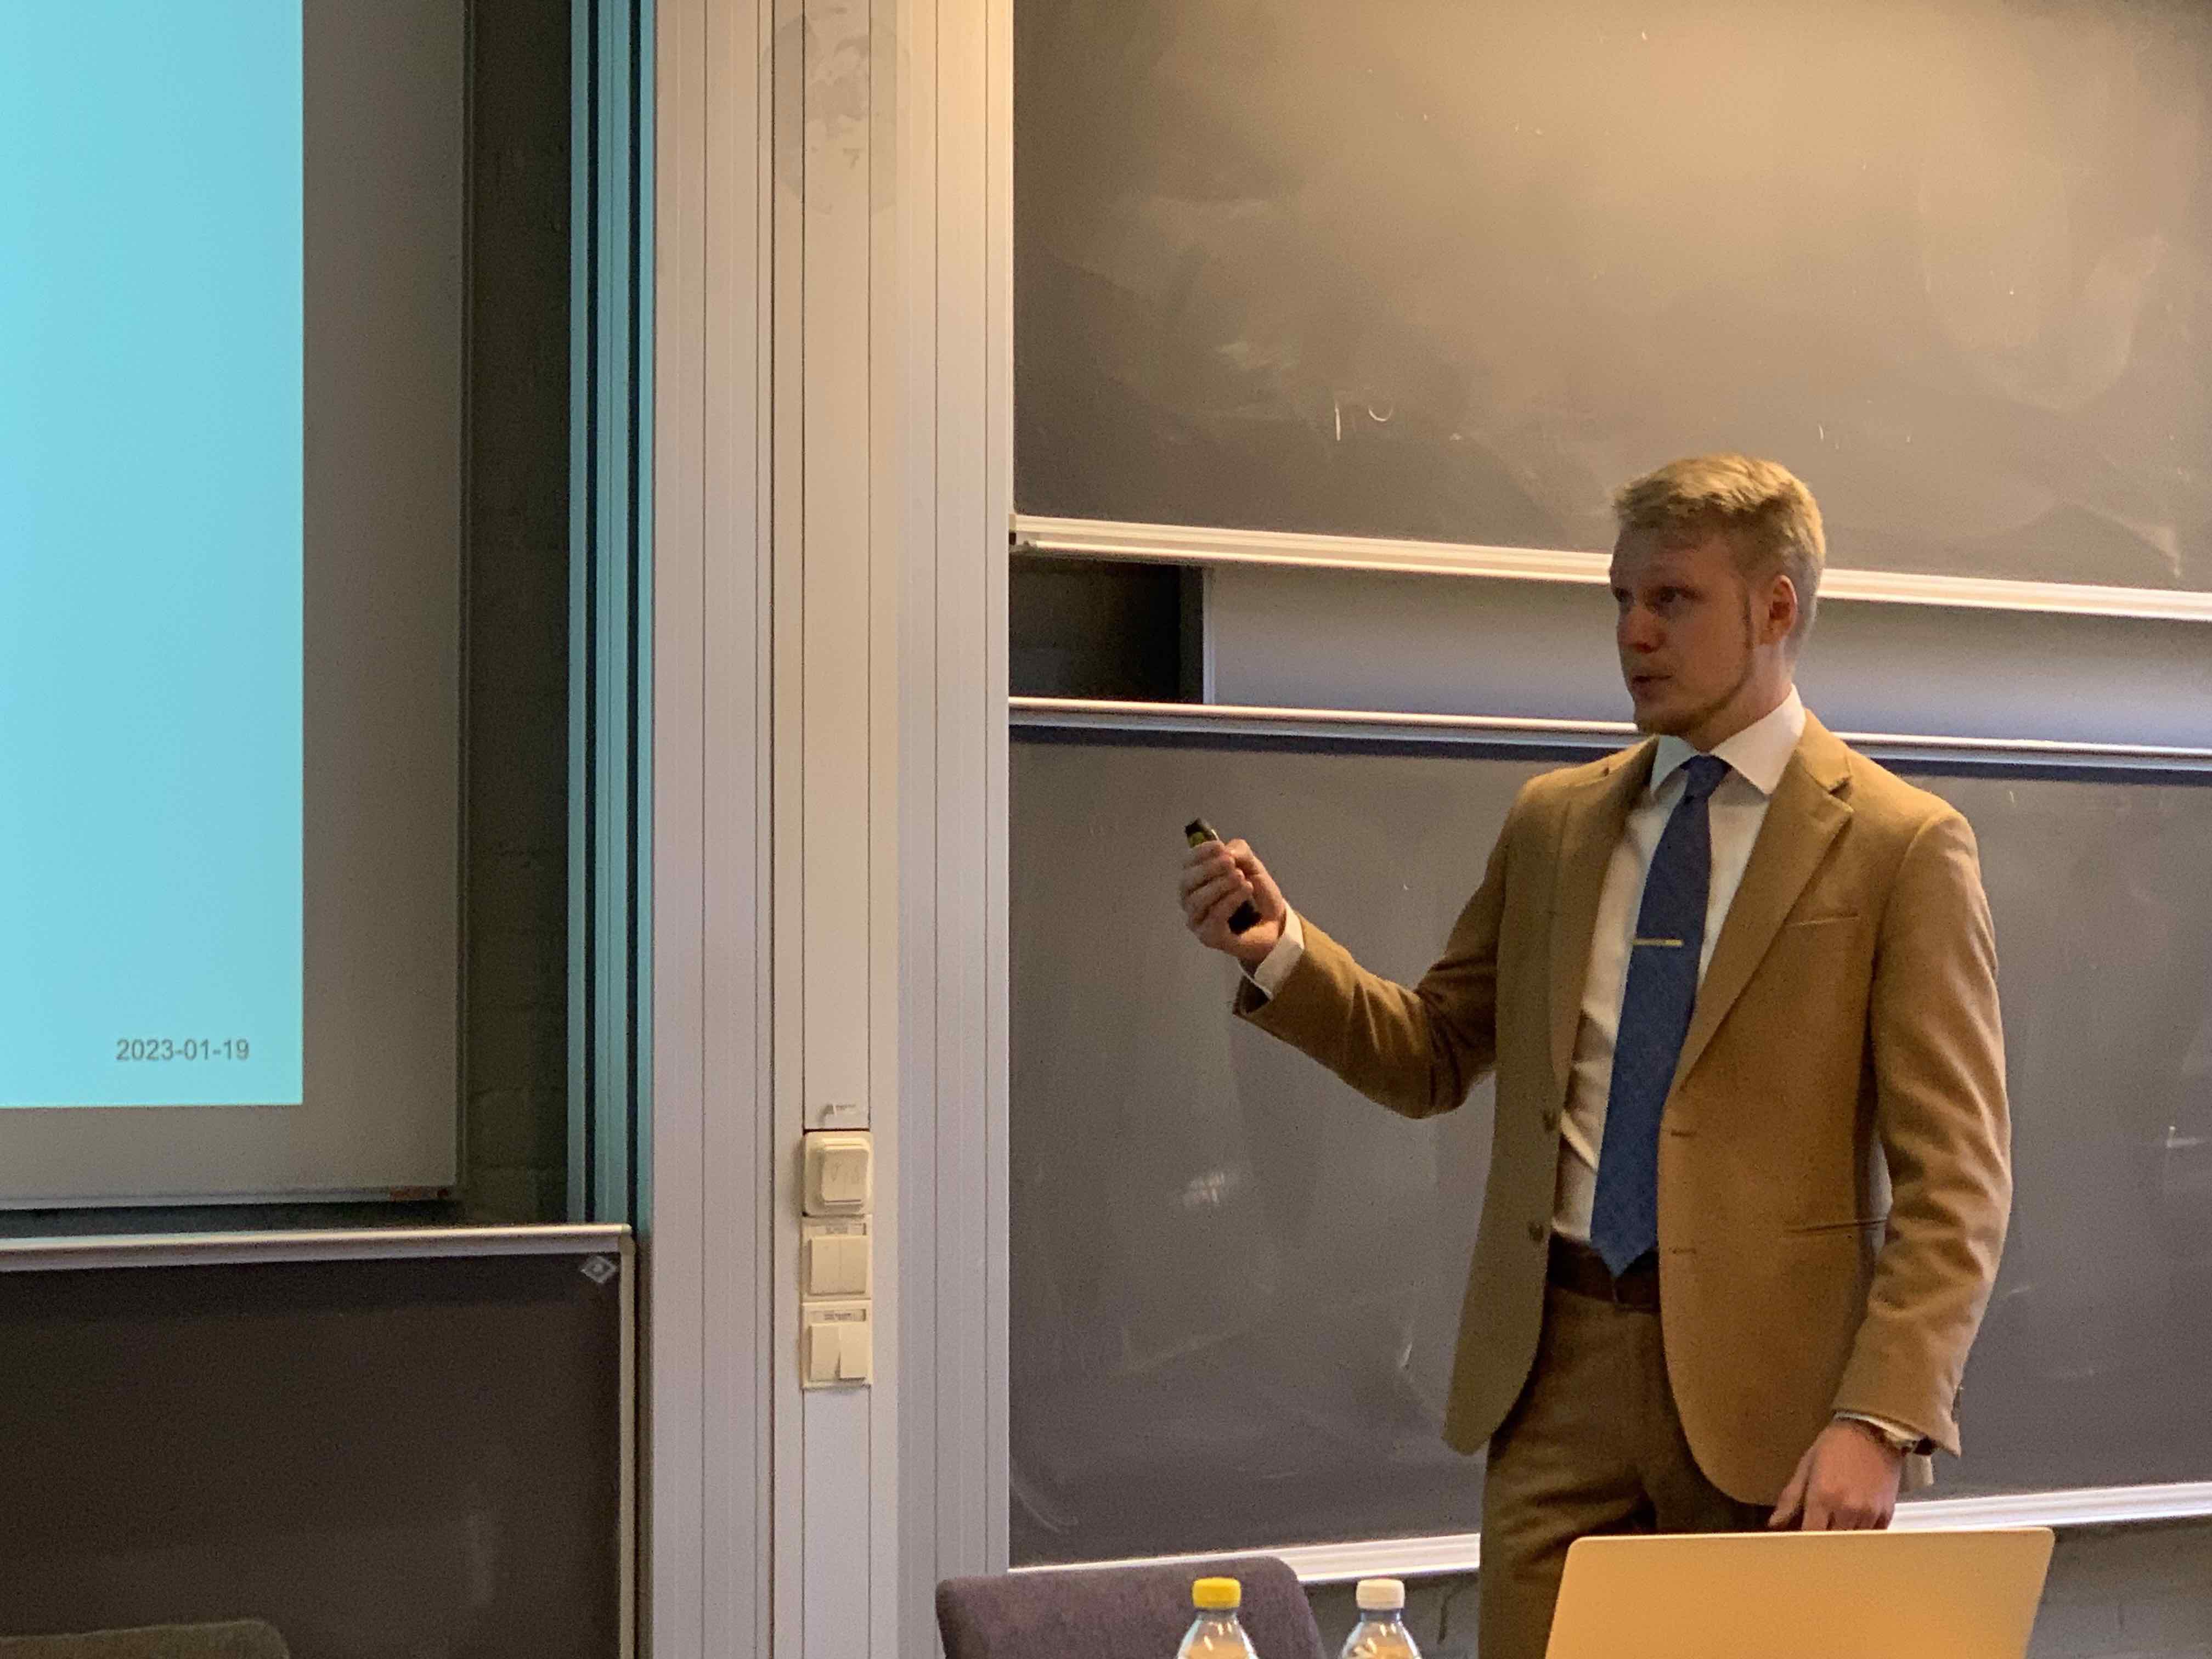 Fredrik during his PhD thesis presentation